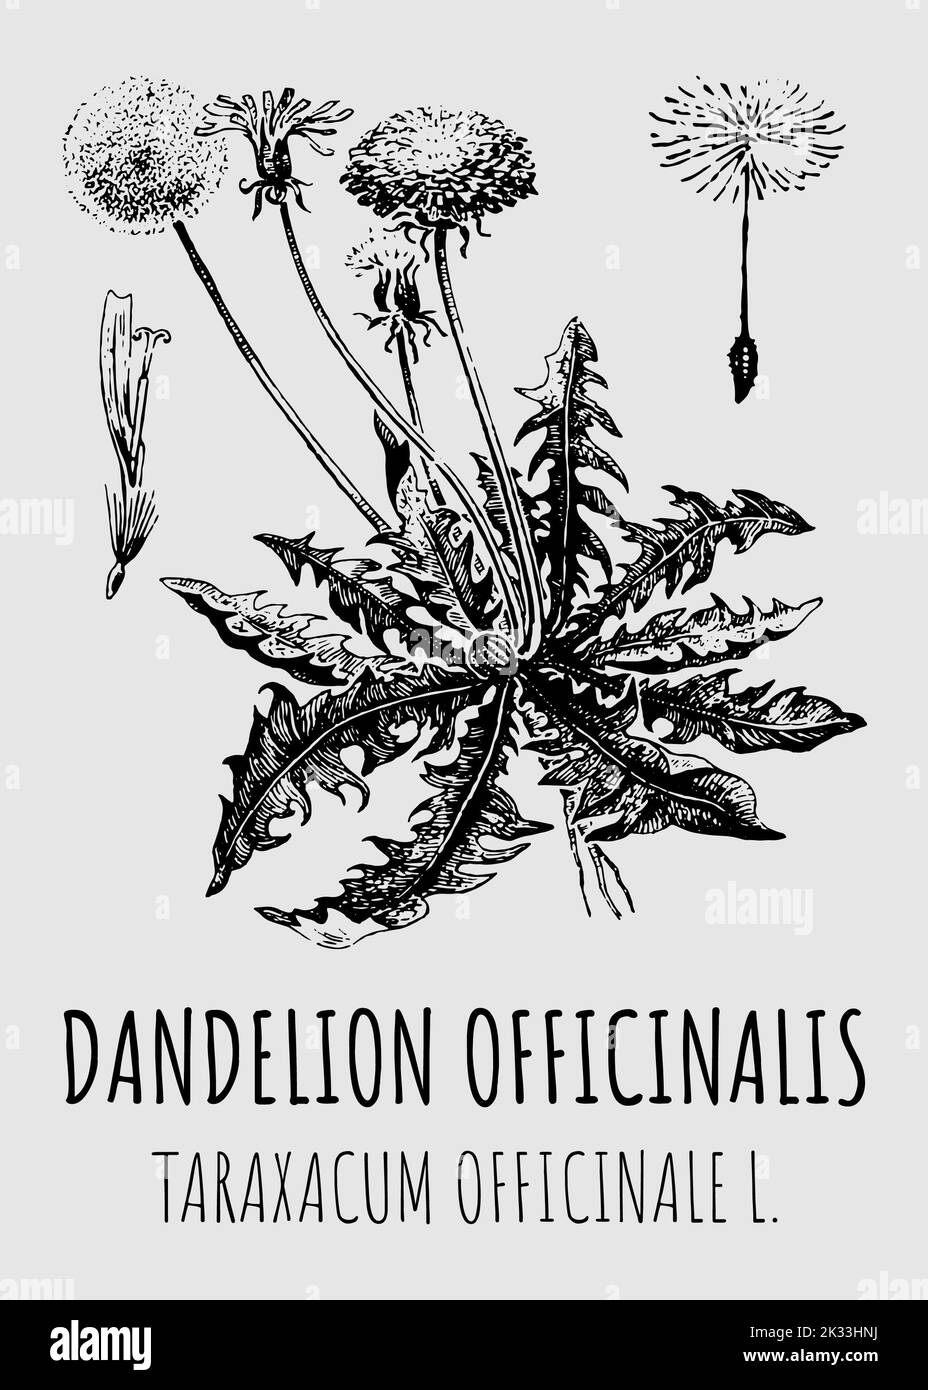 Vector drawings of dandelion. Hand drawn illustration. Latin name Taraxacum officinale. Stock Photo